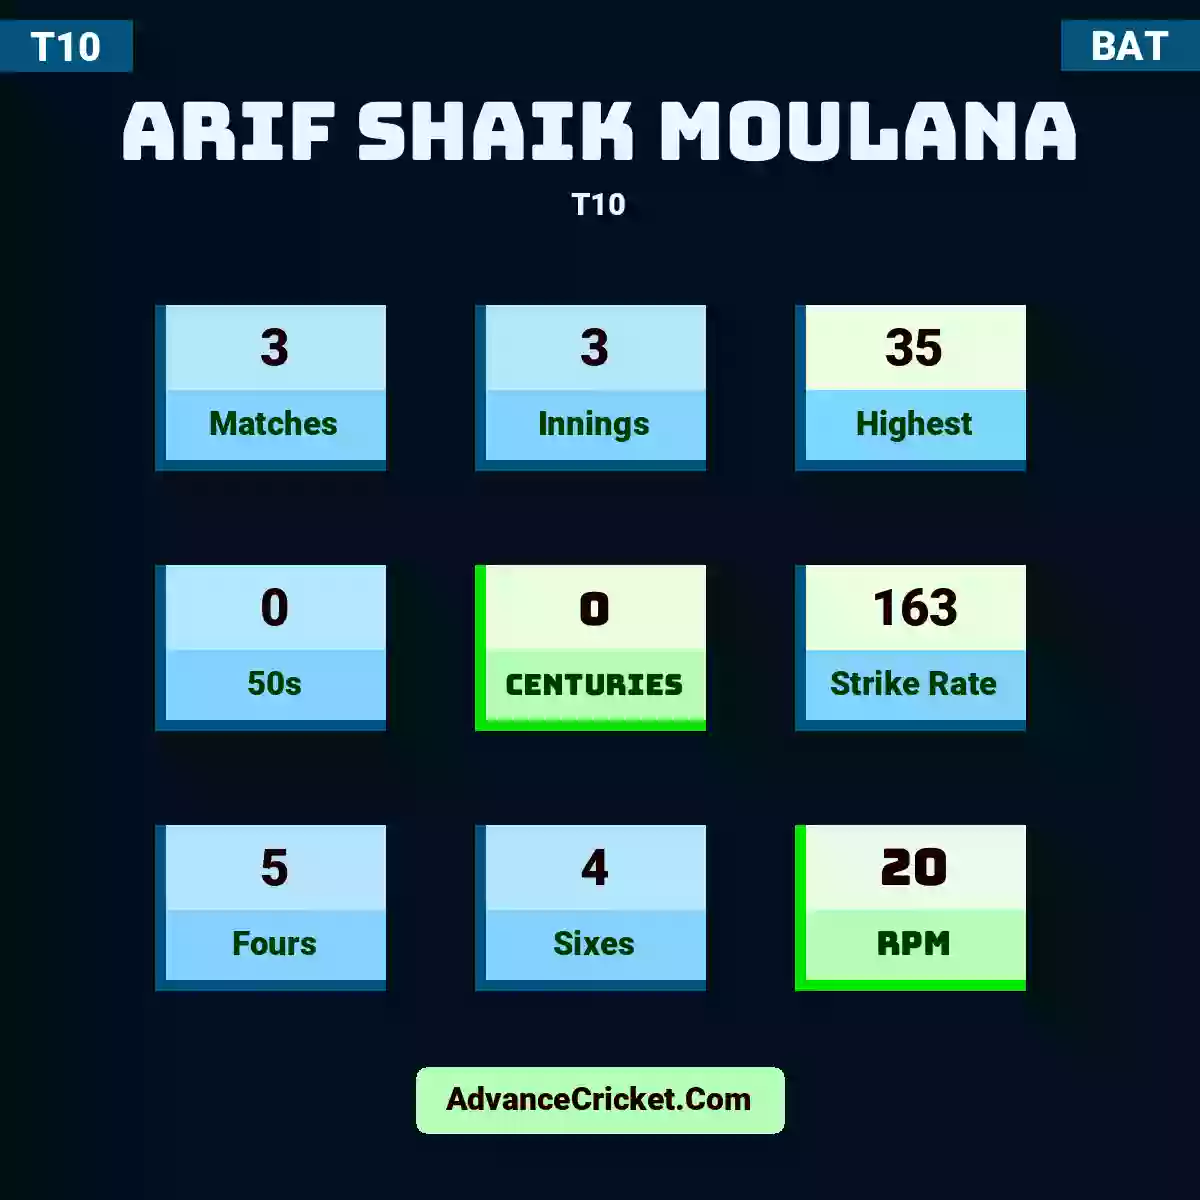 Arif Shaik Moulana T10 , Arif Shaik Moulana played 3 matches, scored 35 runs as highest, 0 half-centuries, and 0 centuries, with a strike rate of 163. A.Shaik.Moulana hit 5 fours and 4 sixes, with an RPM of 20.